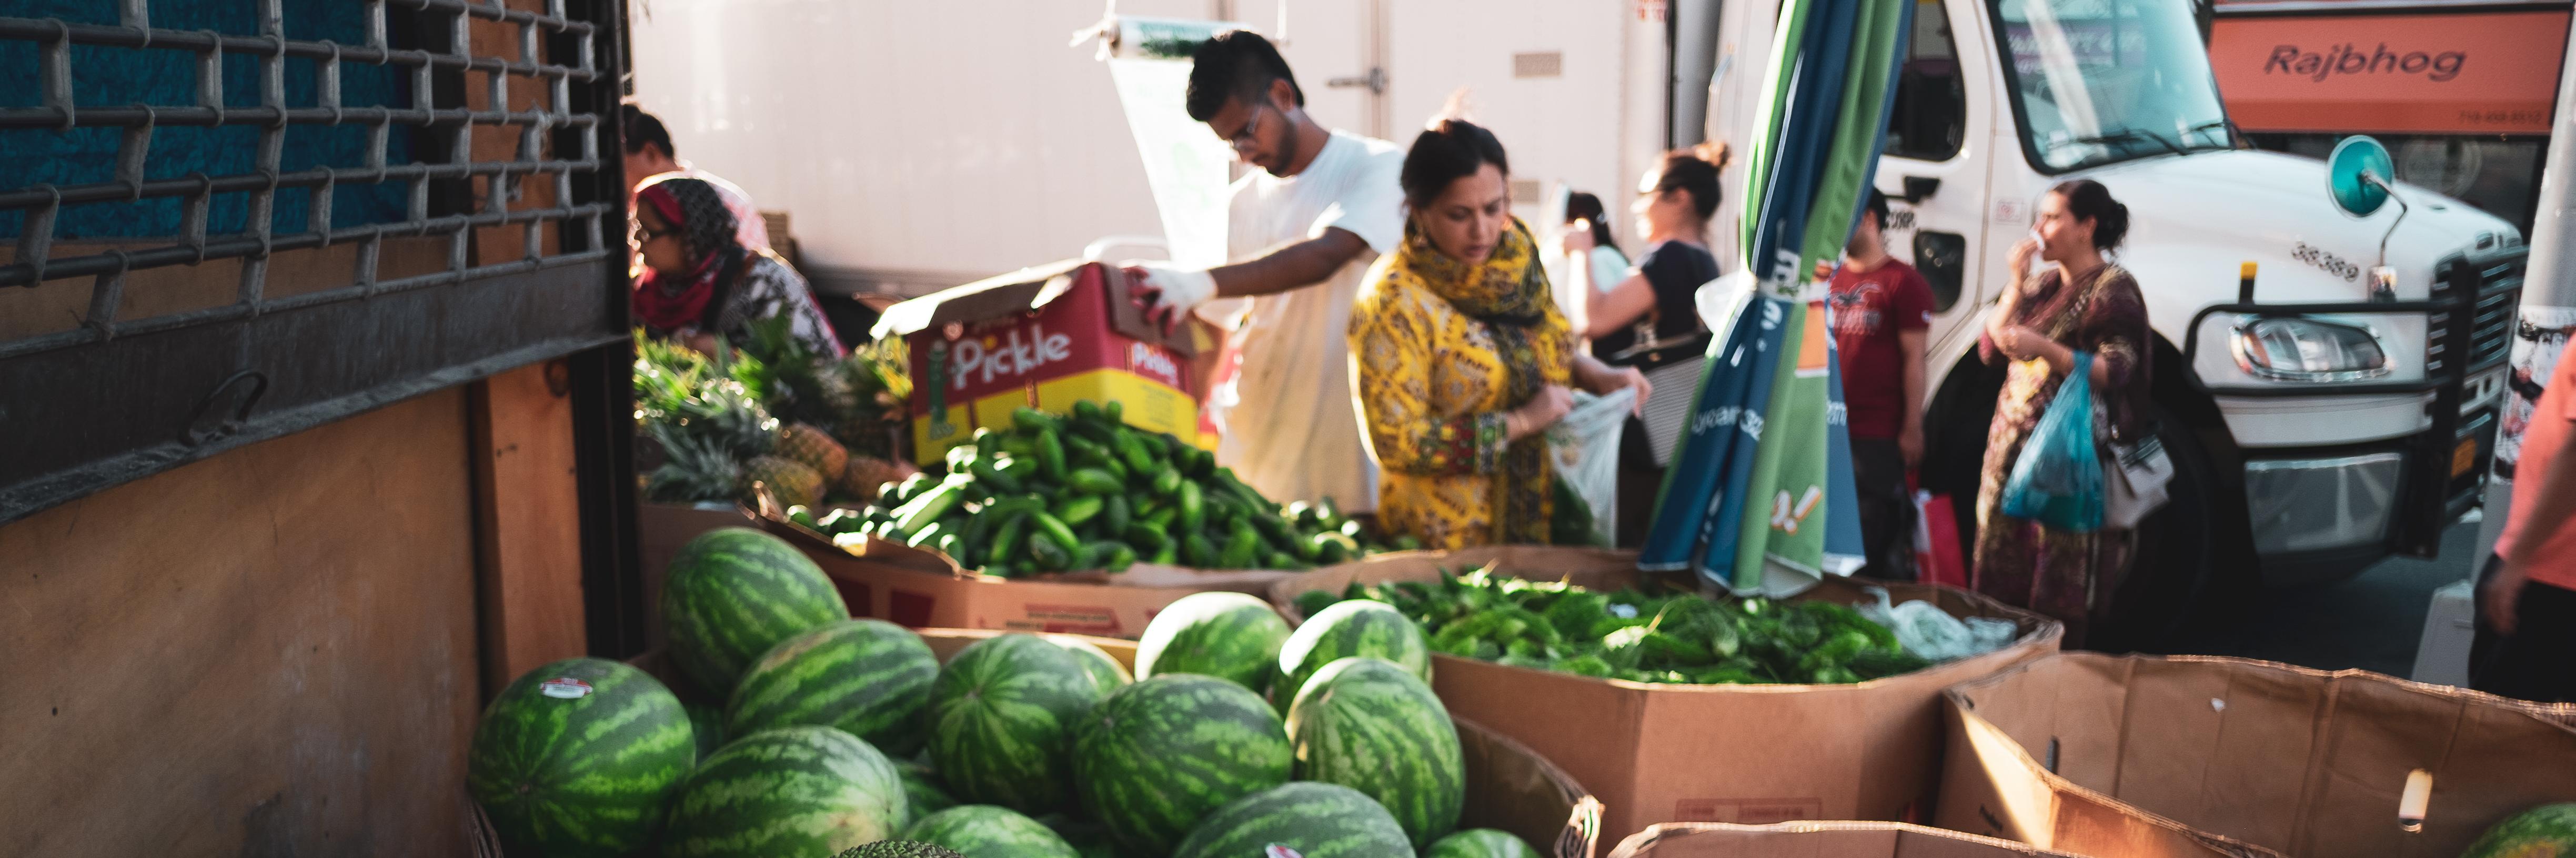 people picking through vegetables in an urban market 